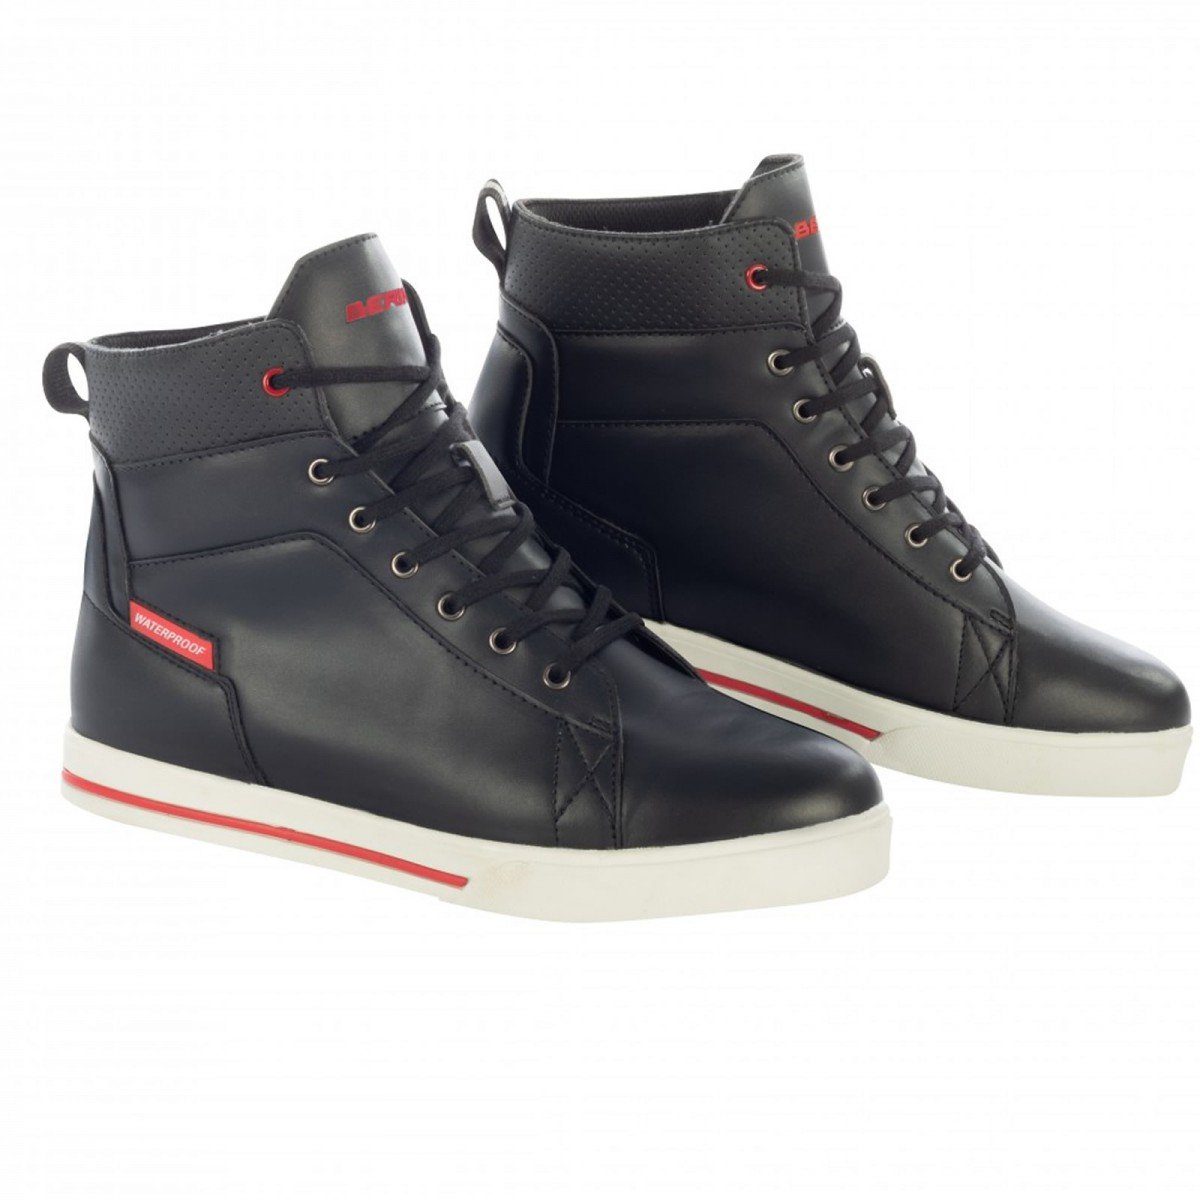 Image of Bering Sneakers Indy Black Red Size 42 EN